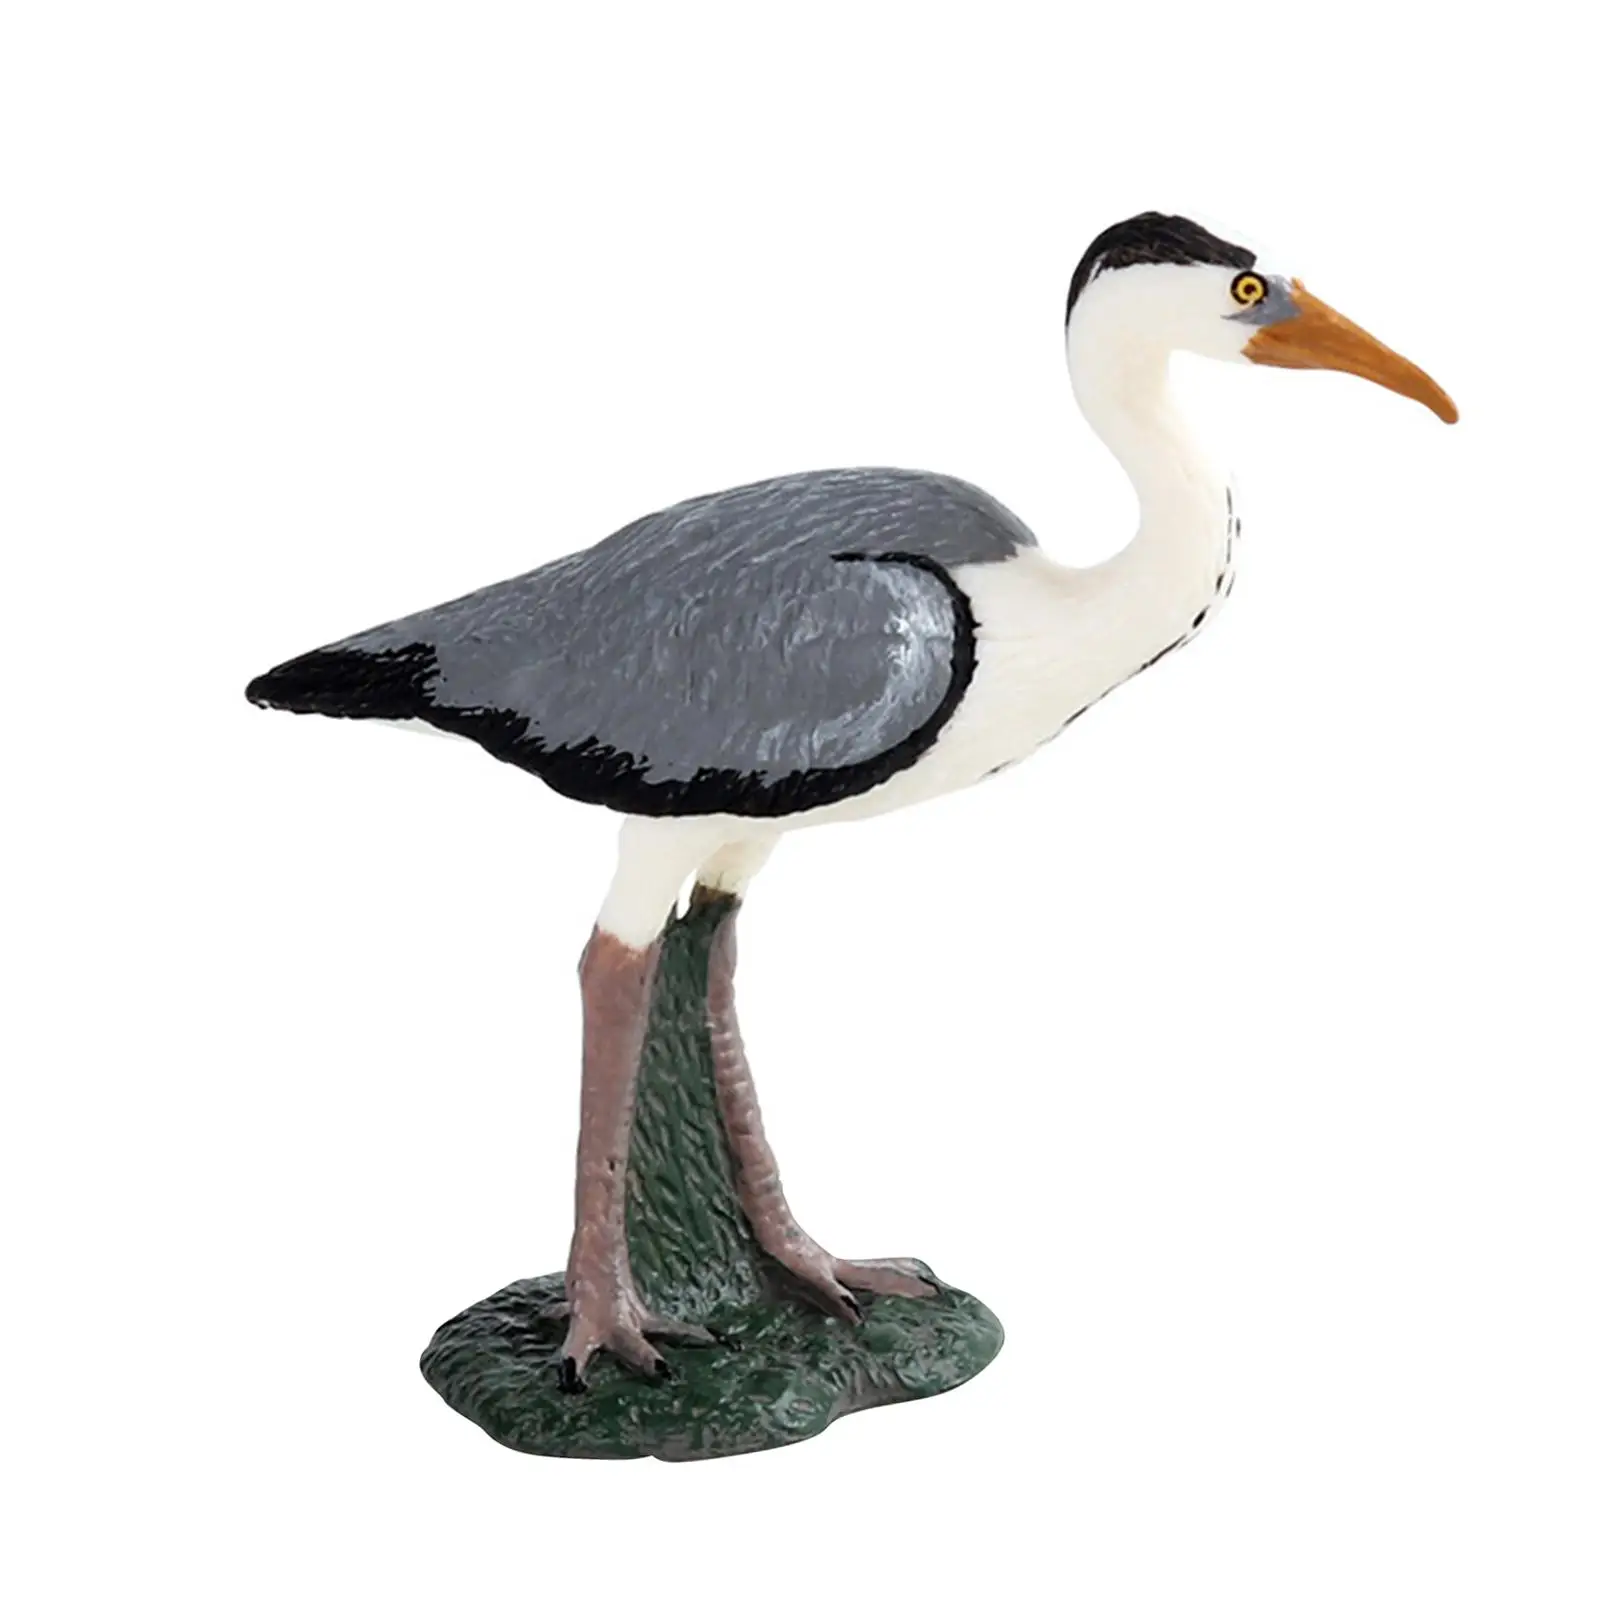 Realistic Garden Bird Statue Bird Figurines Sculpture DIY Crafts Animals Birds Model for Patio Outdoor Garden Decor Ornament